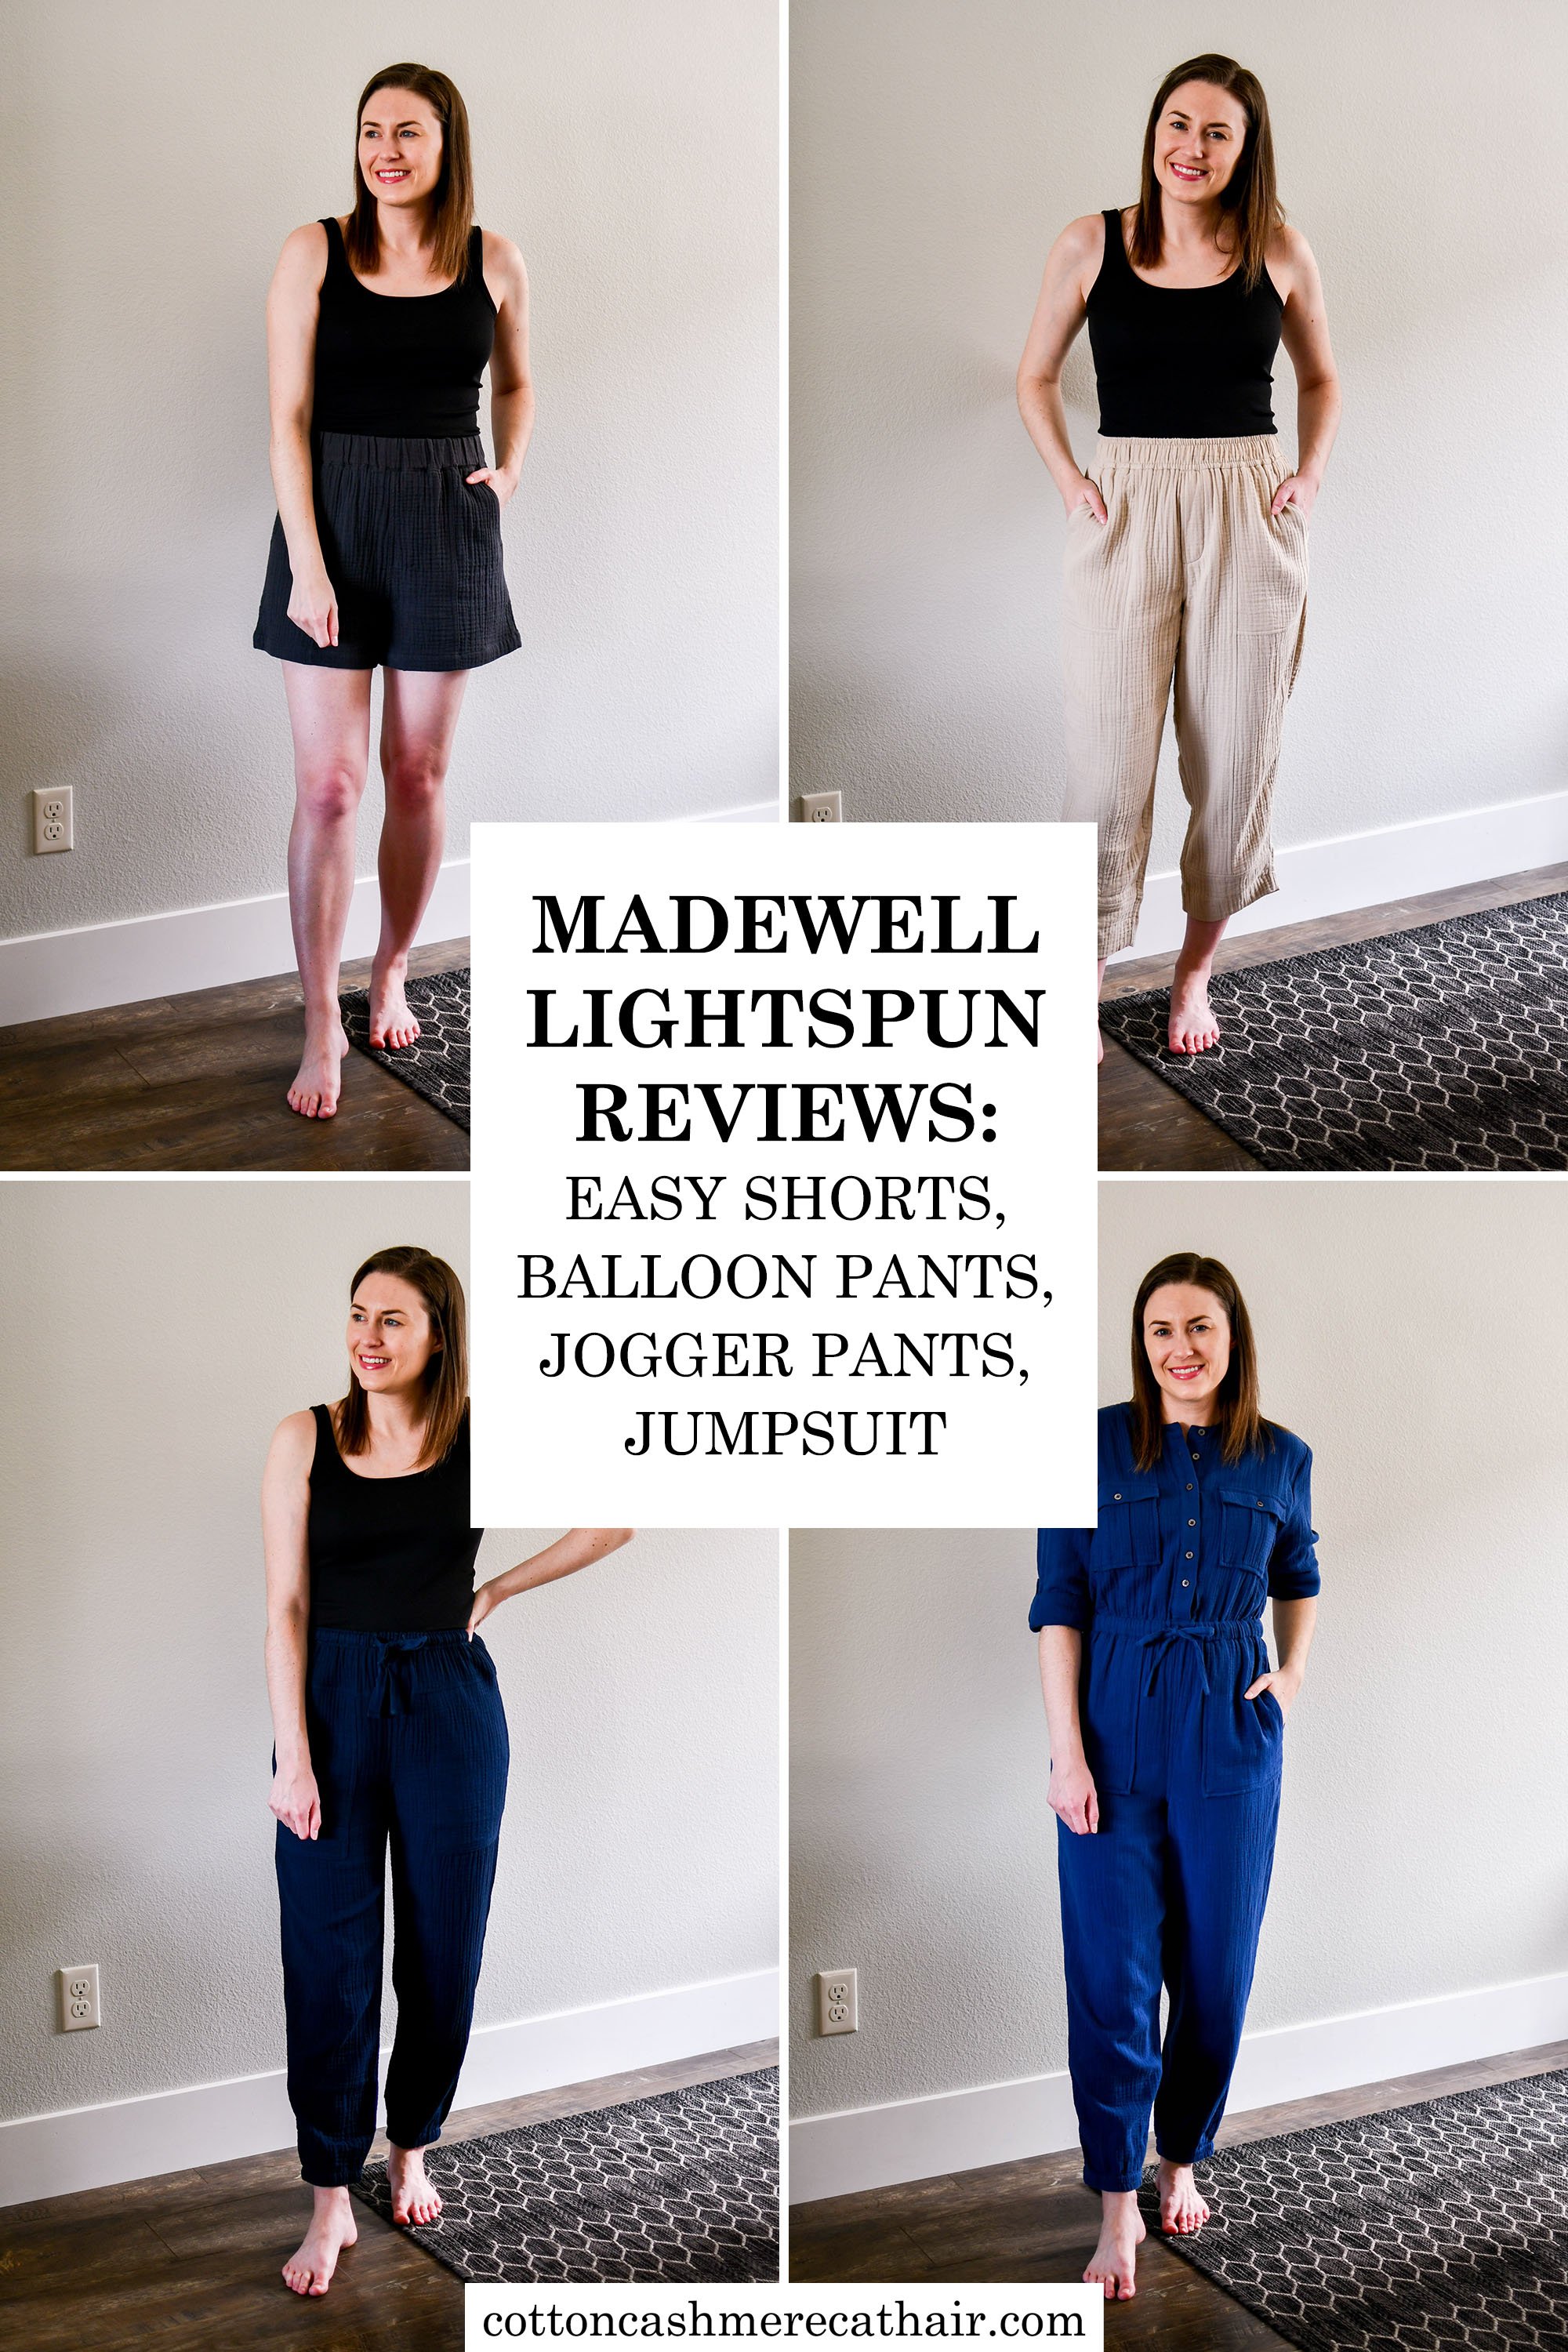 Madewell Different Lightspun Styles: Jumpsuit, Pants, Shorts